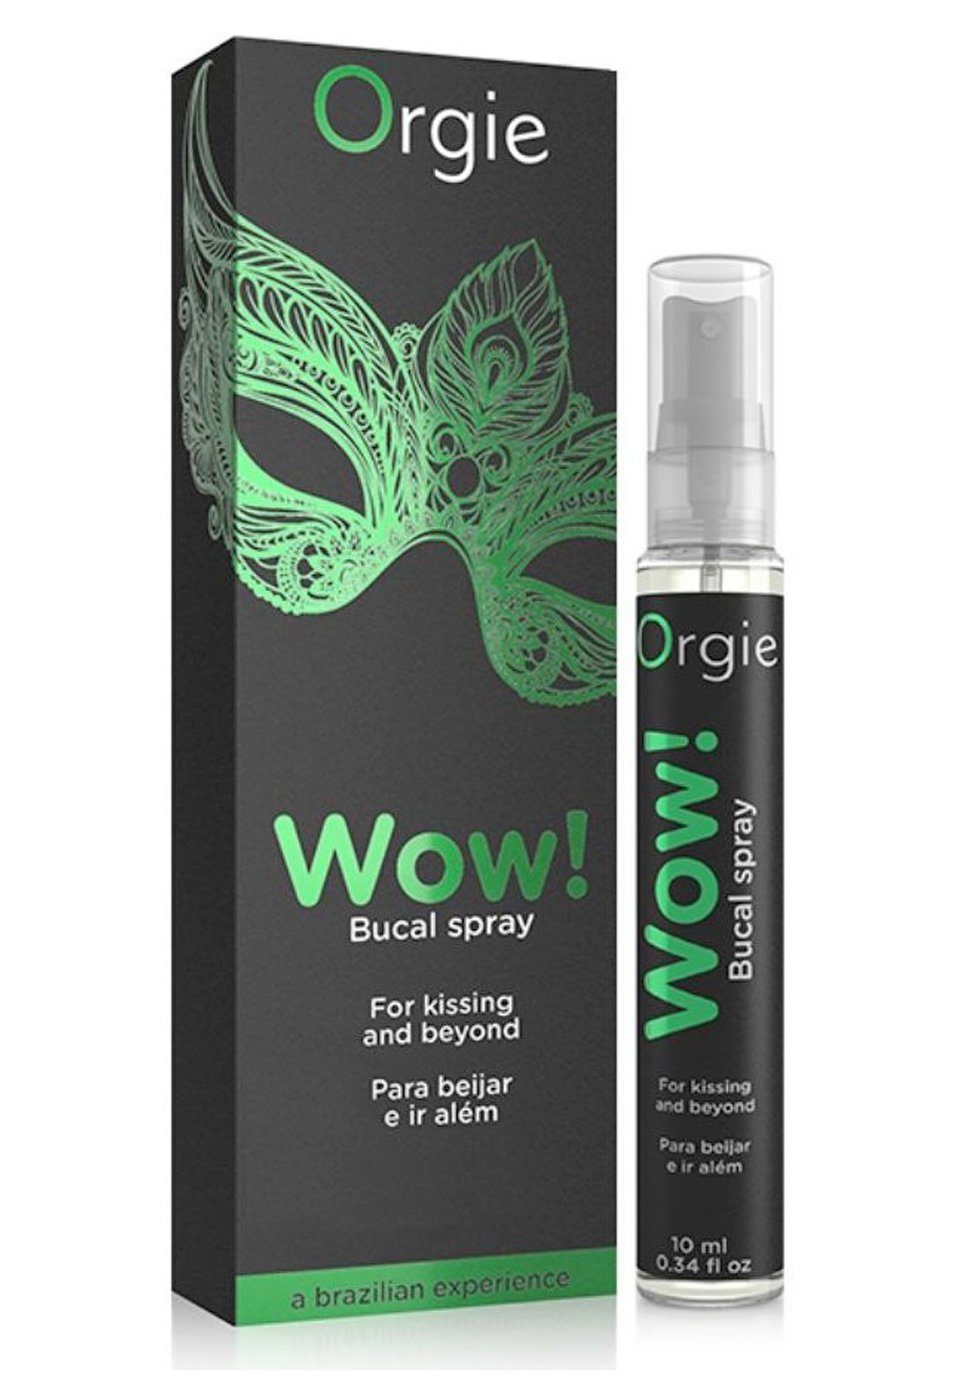 Spray Blowjob - Orgie Eukalyptus Stimulationsgel